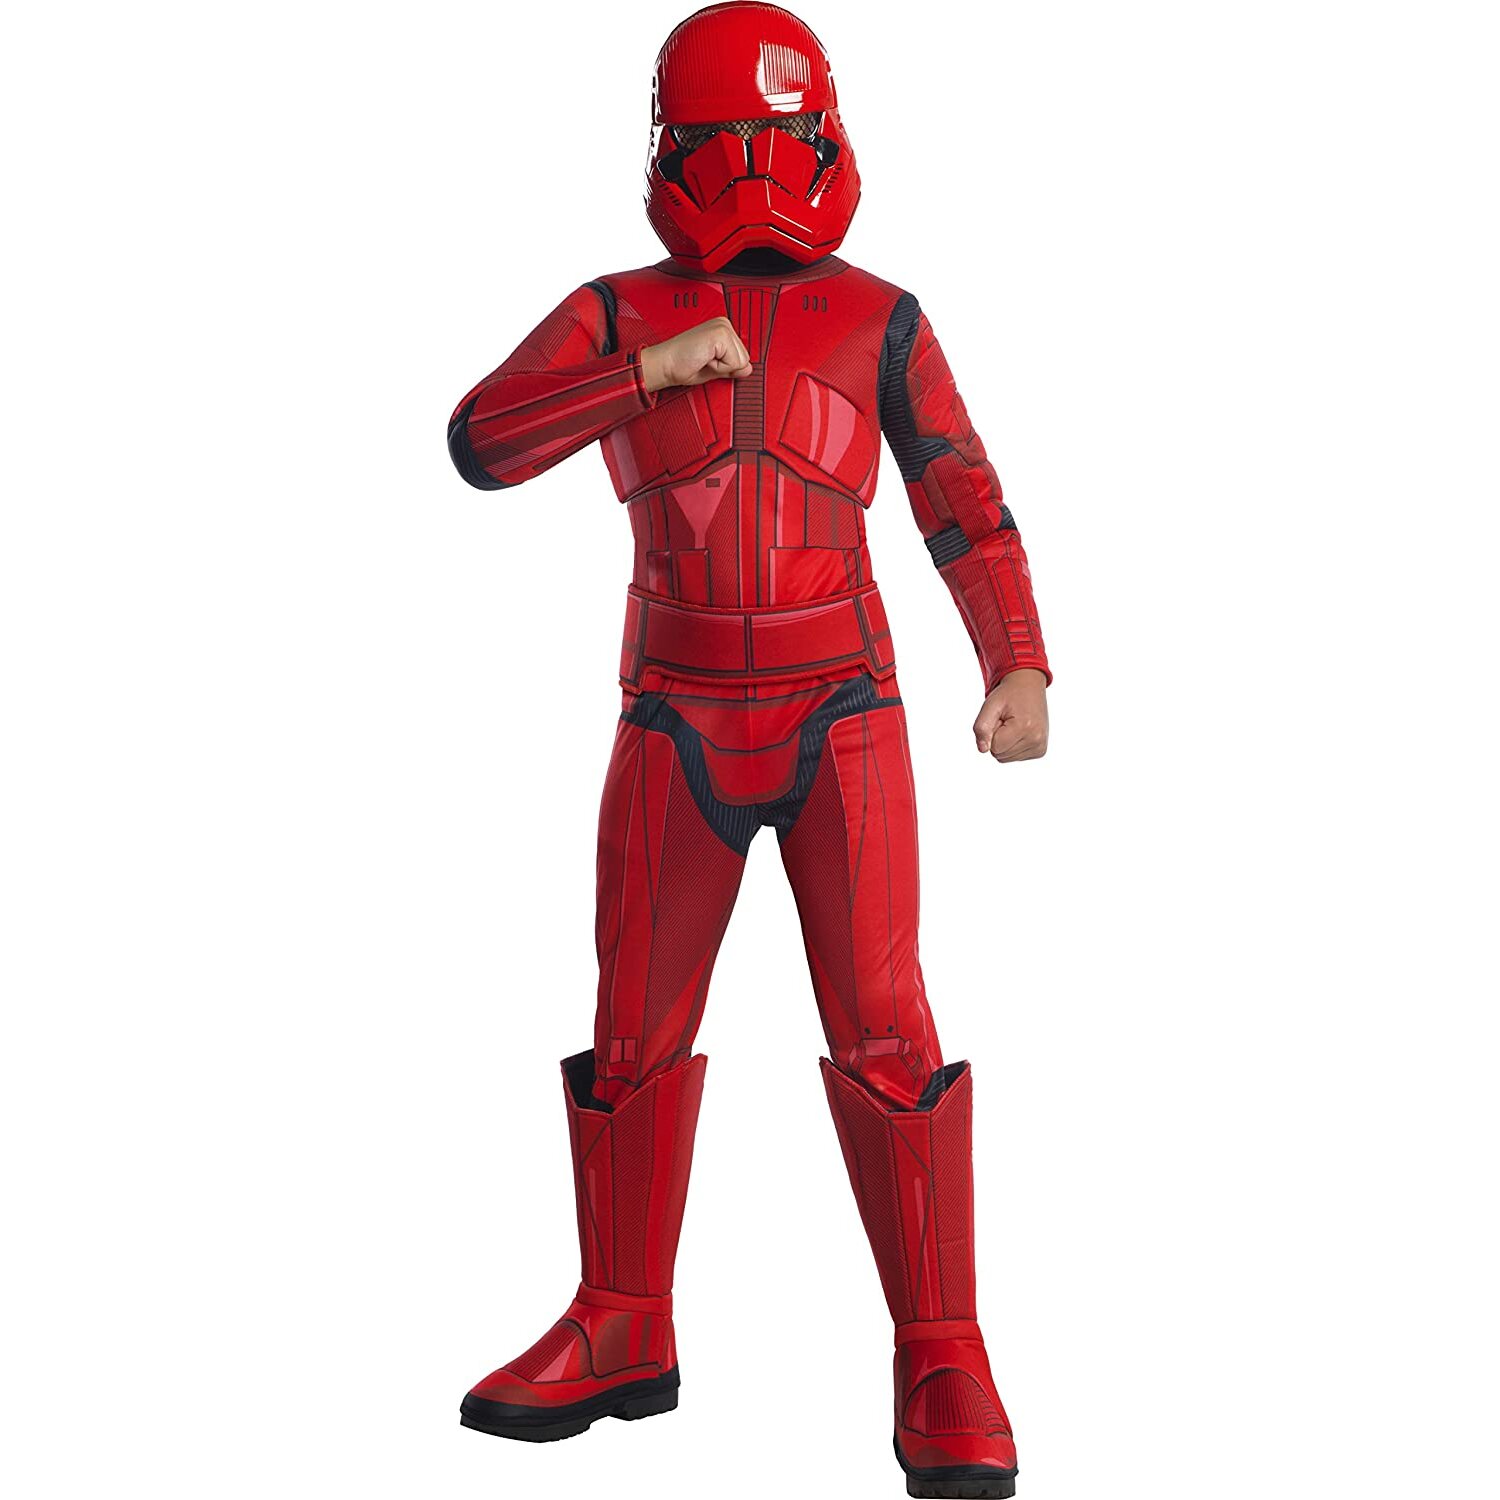 Rubie's Official Disney Star Wars Ep 9 Red Stormtrooper Deluxe Child Costume, Kids Fancy Dress